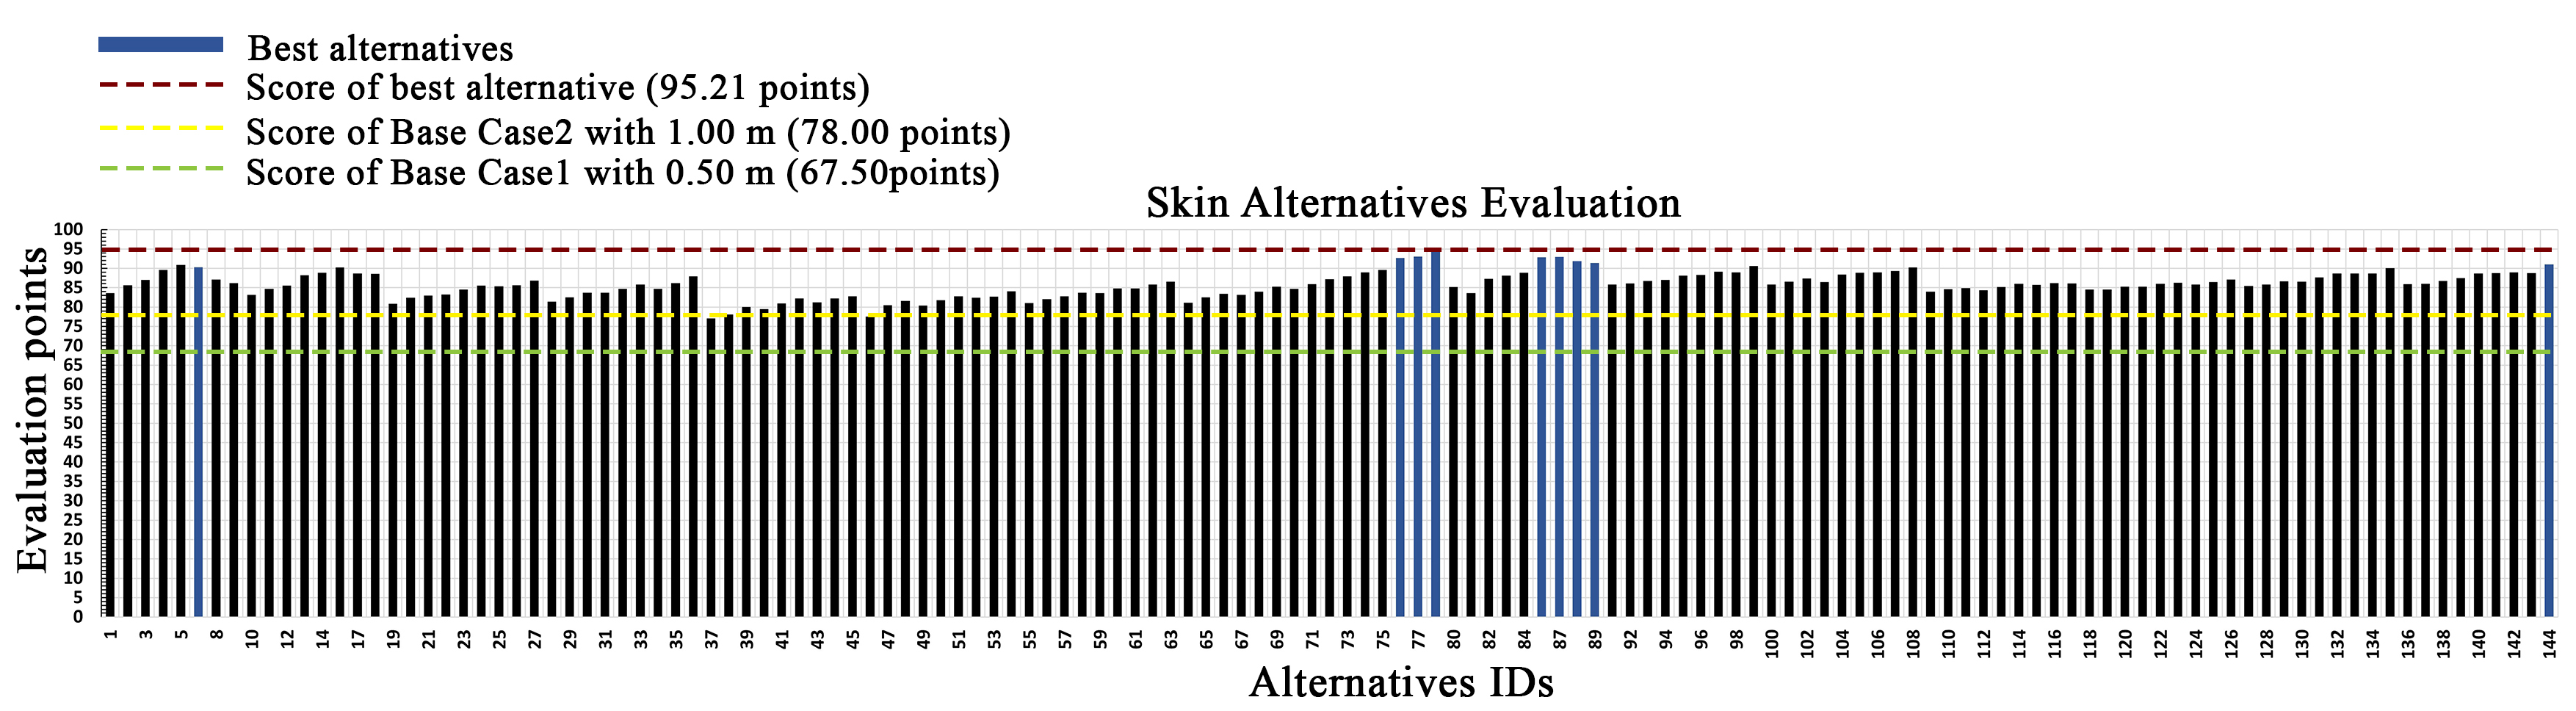 Evaluation of the building skin alternatives.